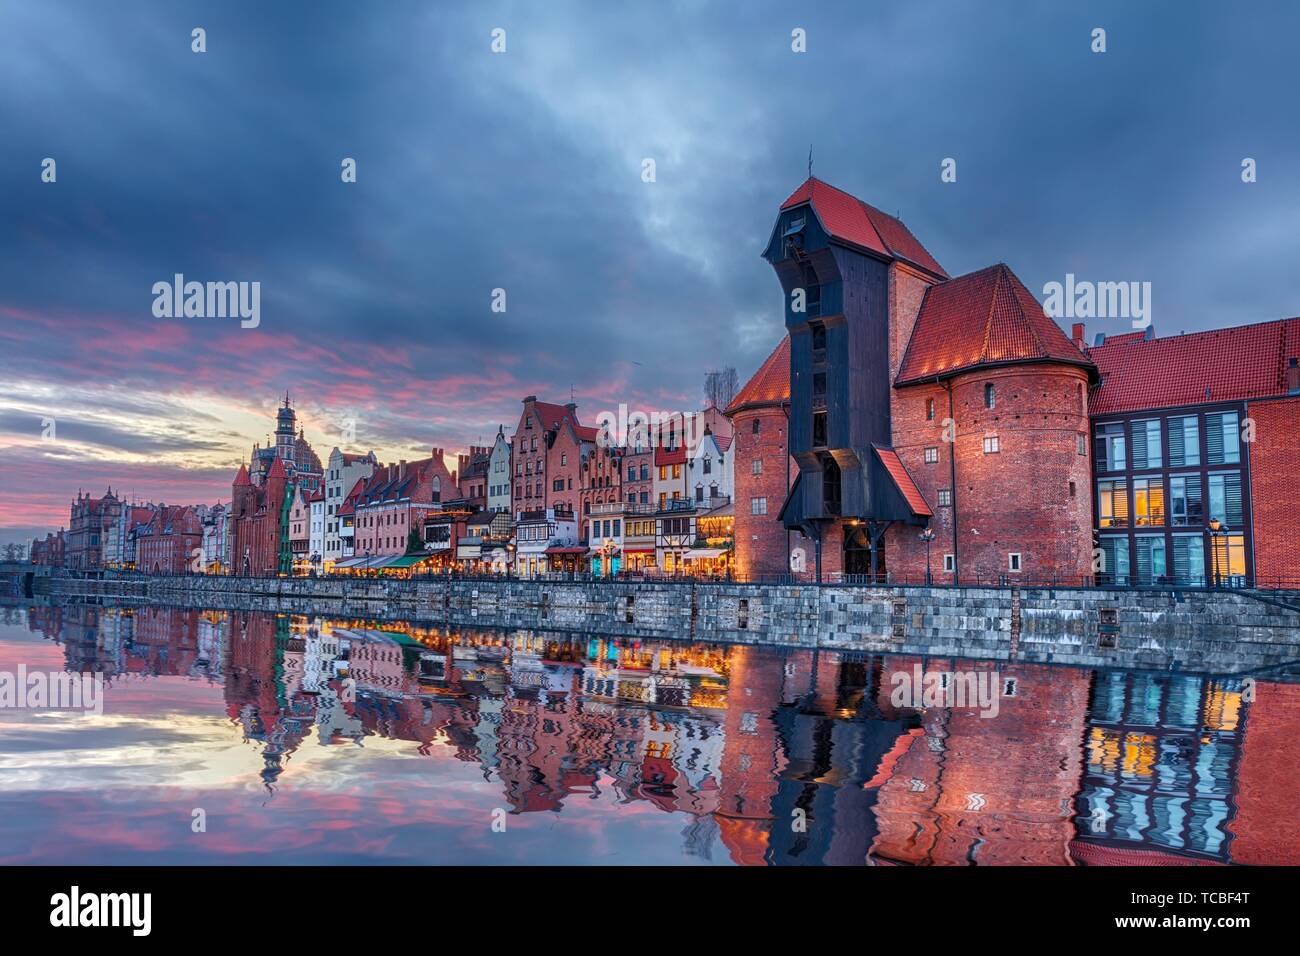 Gdansk bel tramonto, vista sul porto Zuraw gru e facciate medievali, Polonia. Foto Stock